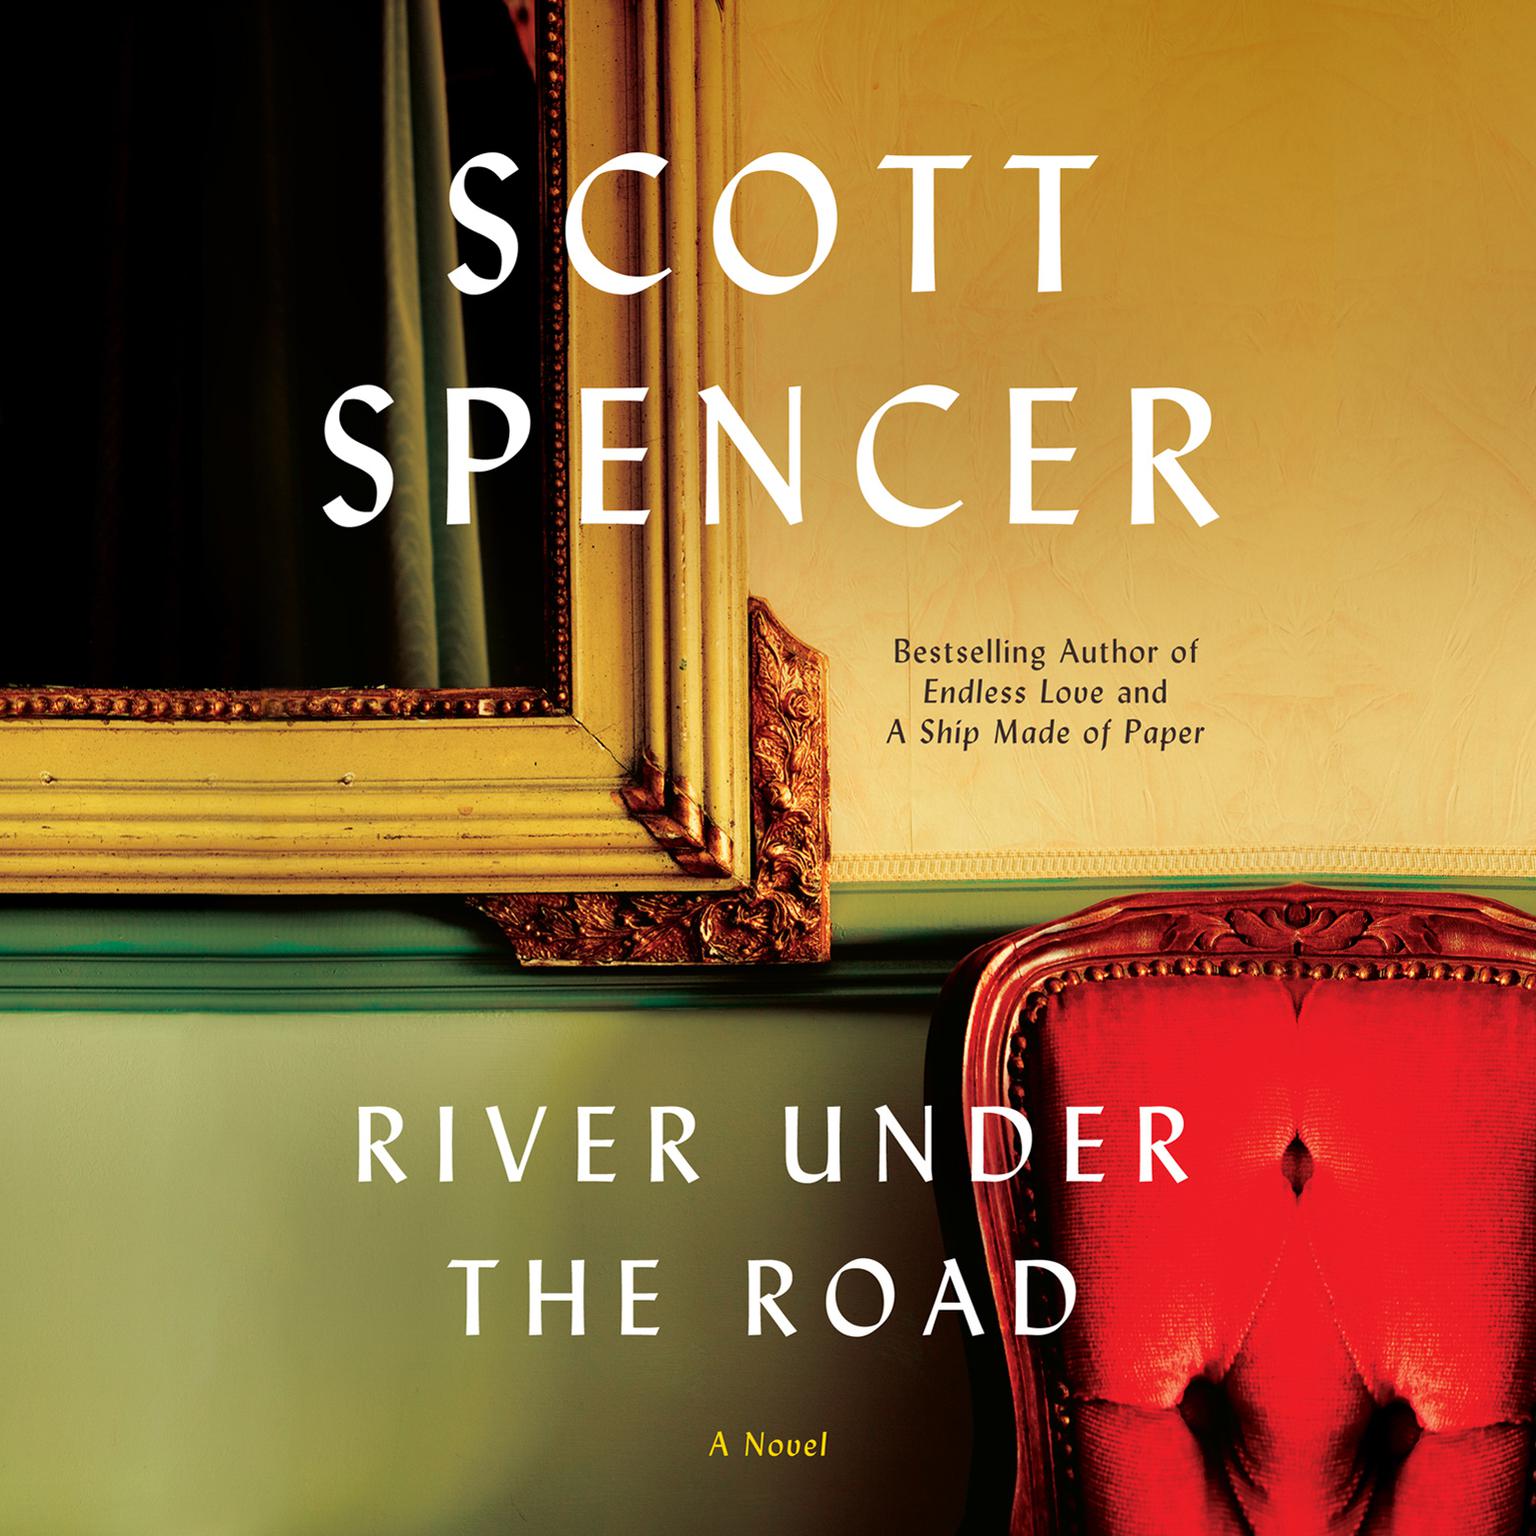 River Under the Road: A Novel Audiobook, by Scott Spencer